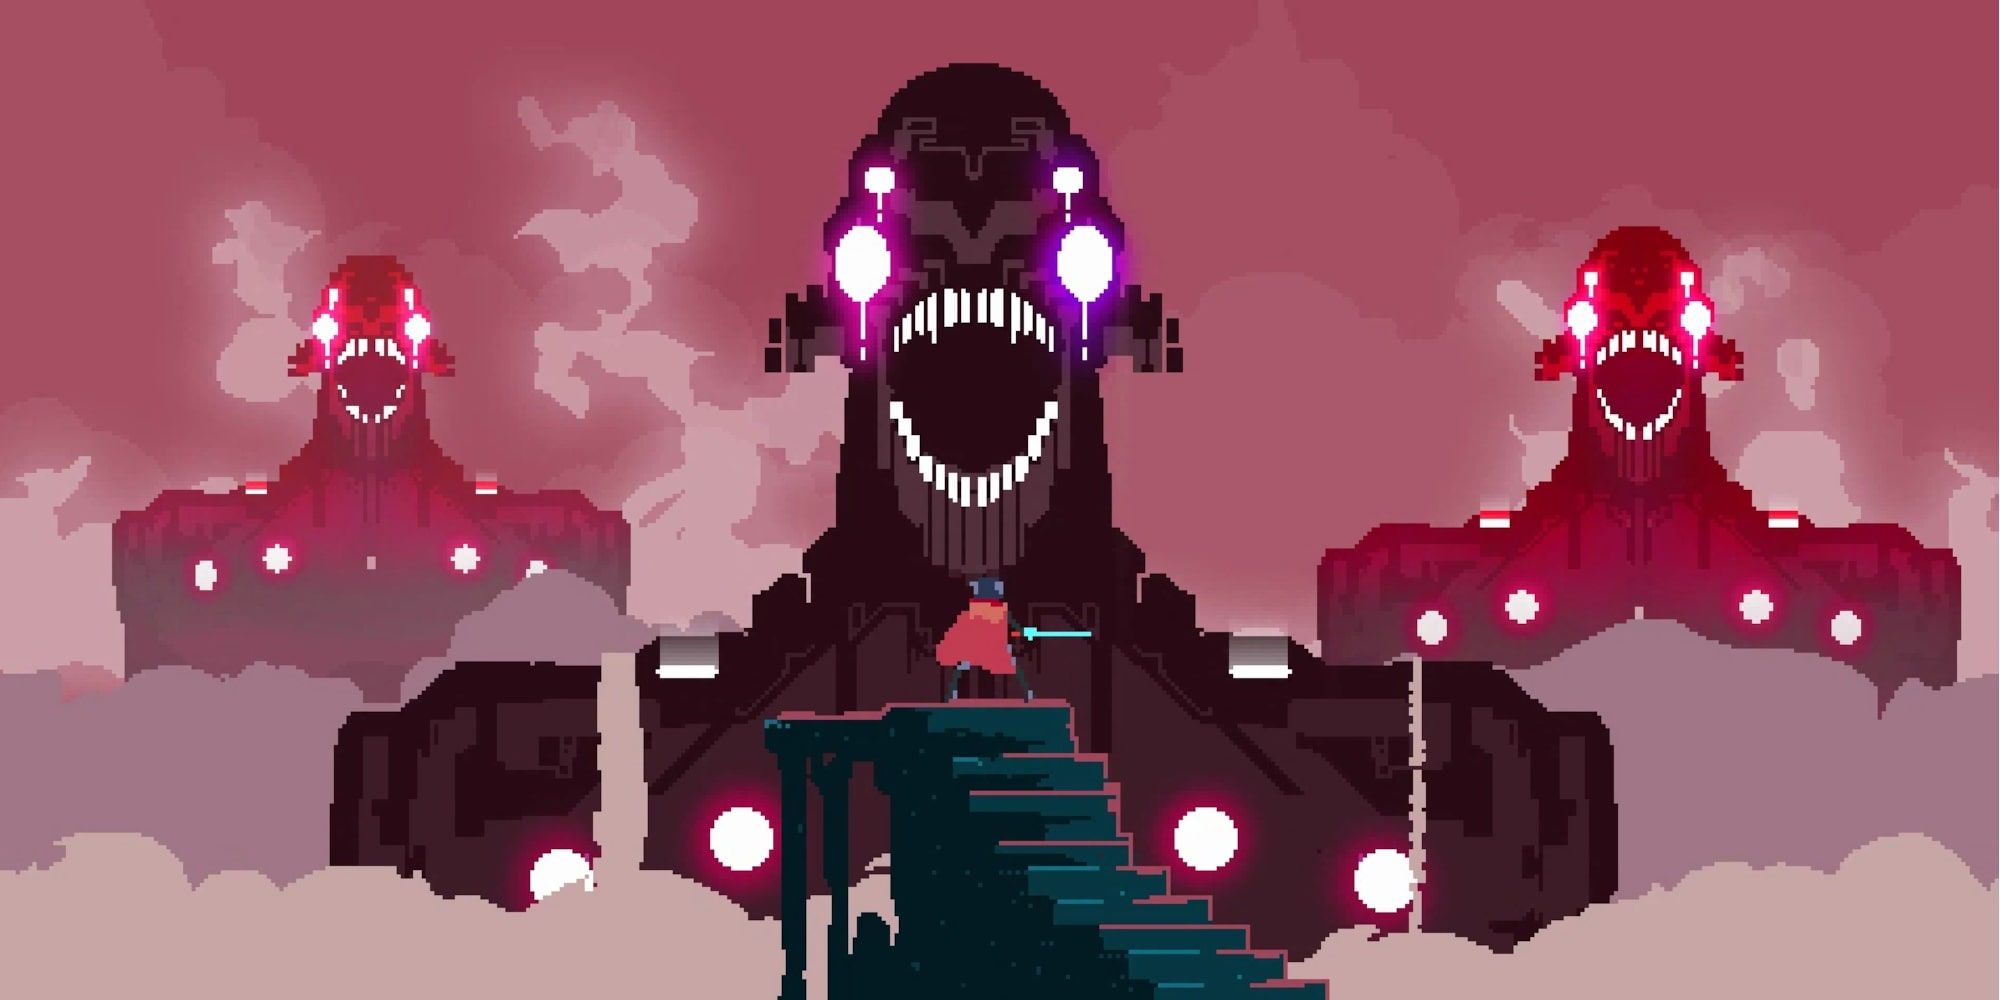 Hyper Light Drifter player with sword facing giant monsters